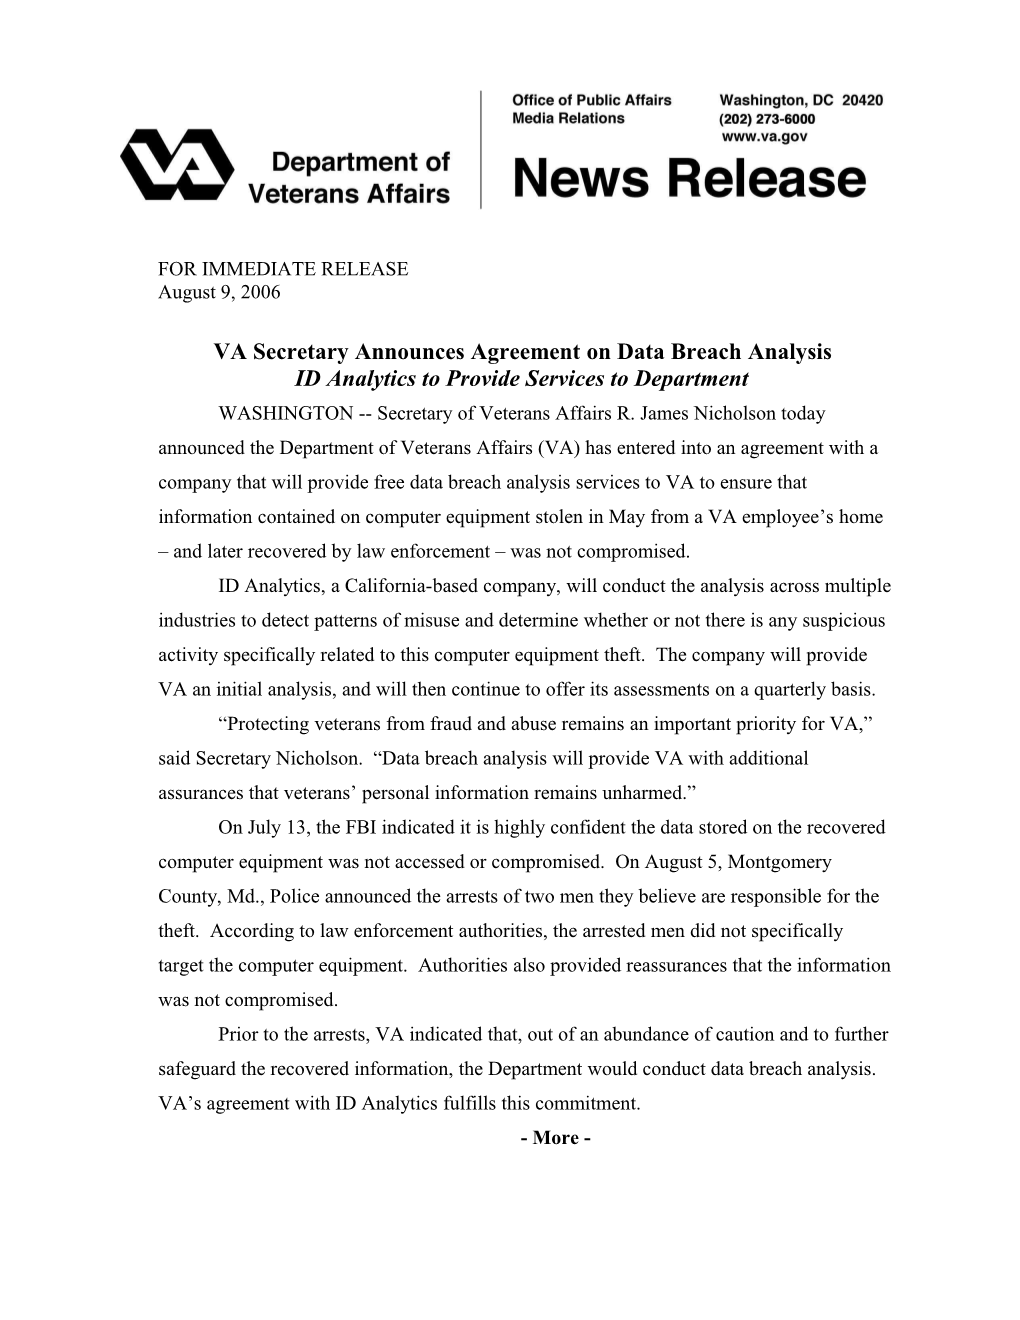 VA Secretary Announces Agreement on Data Breach Analysis